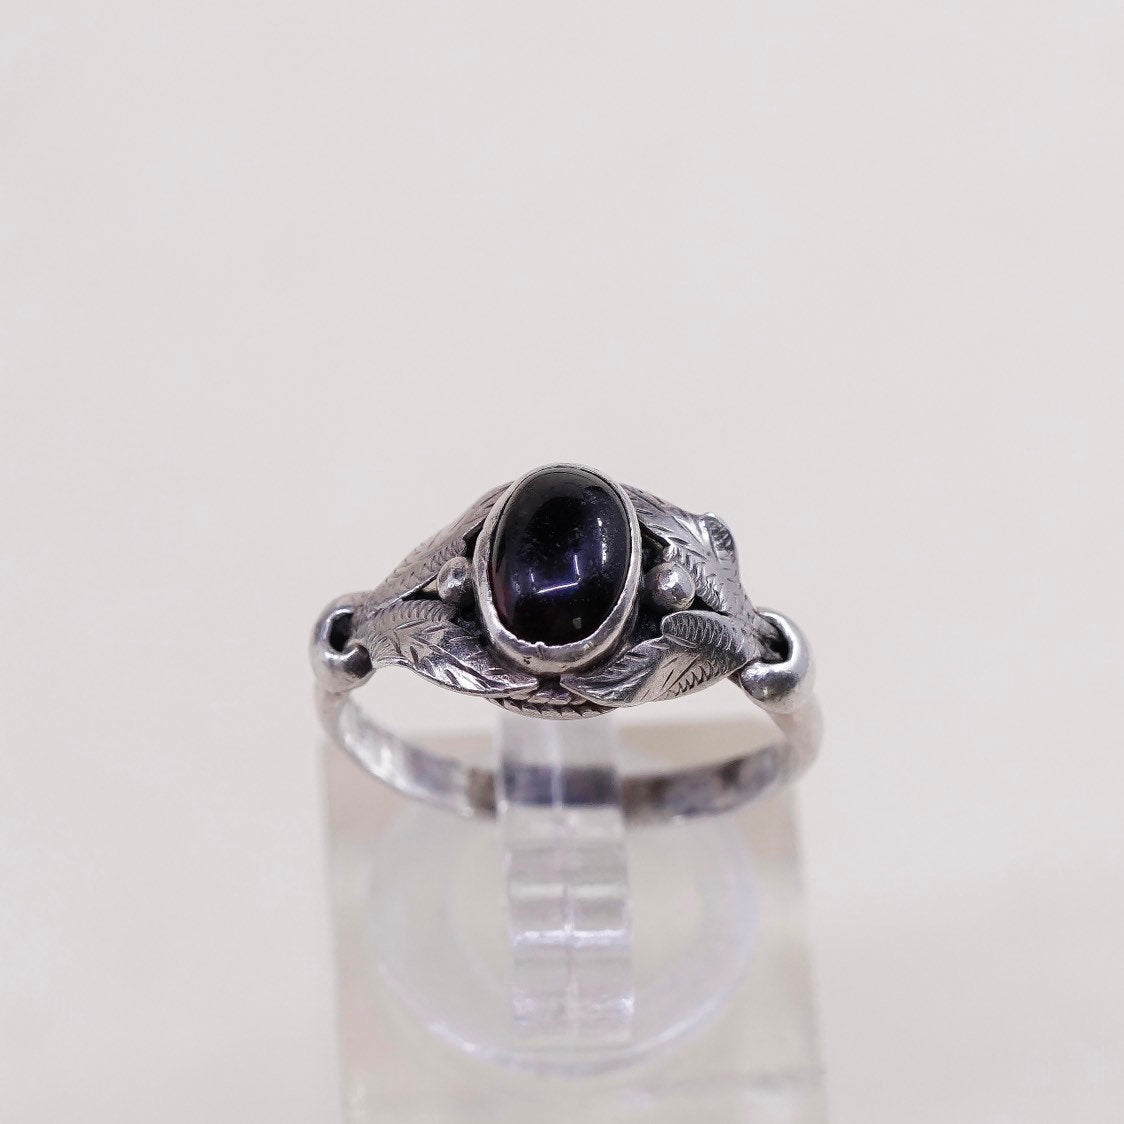 sz 7, vtg sterling silver handmade ring, 925 w/ garnet n leaves around